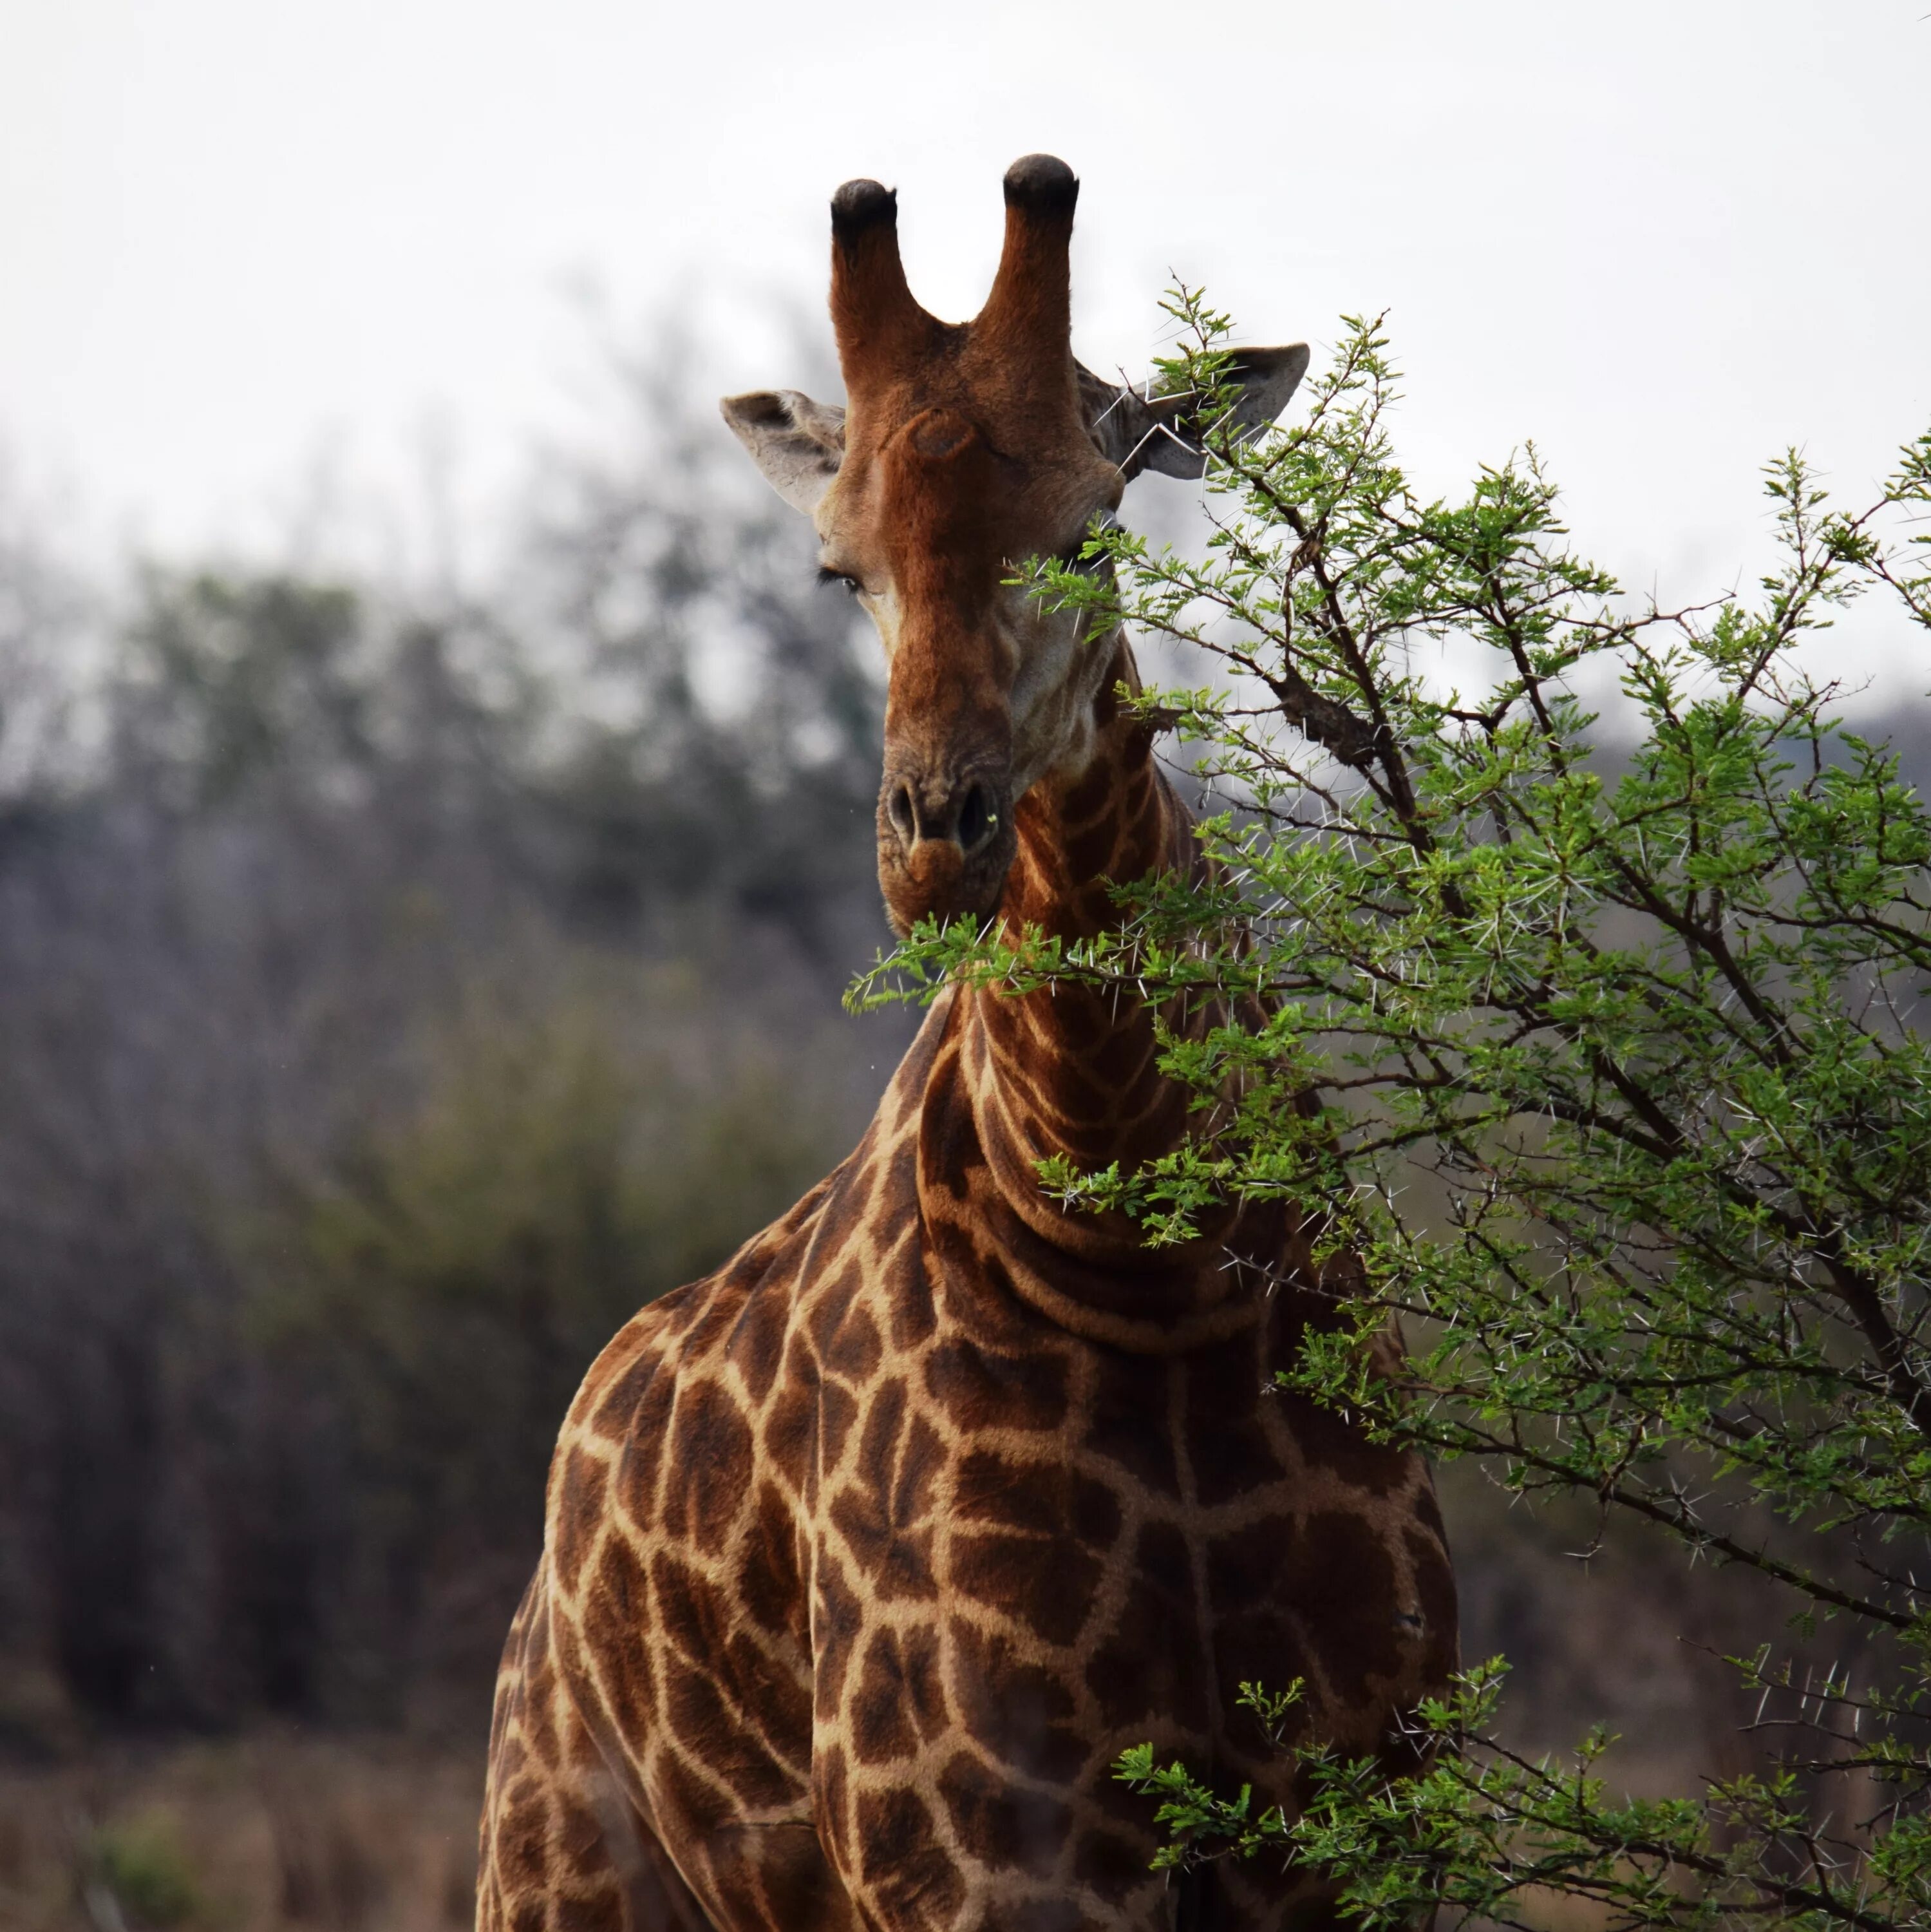 Южноафриканский Жираф. Жираф саванны Африки. Африка Саванна Жирафы. Эндемики Африки Жираф южноафриканский. Жираф африканское животное